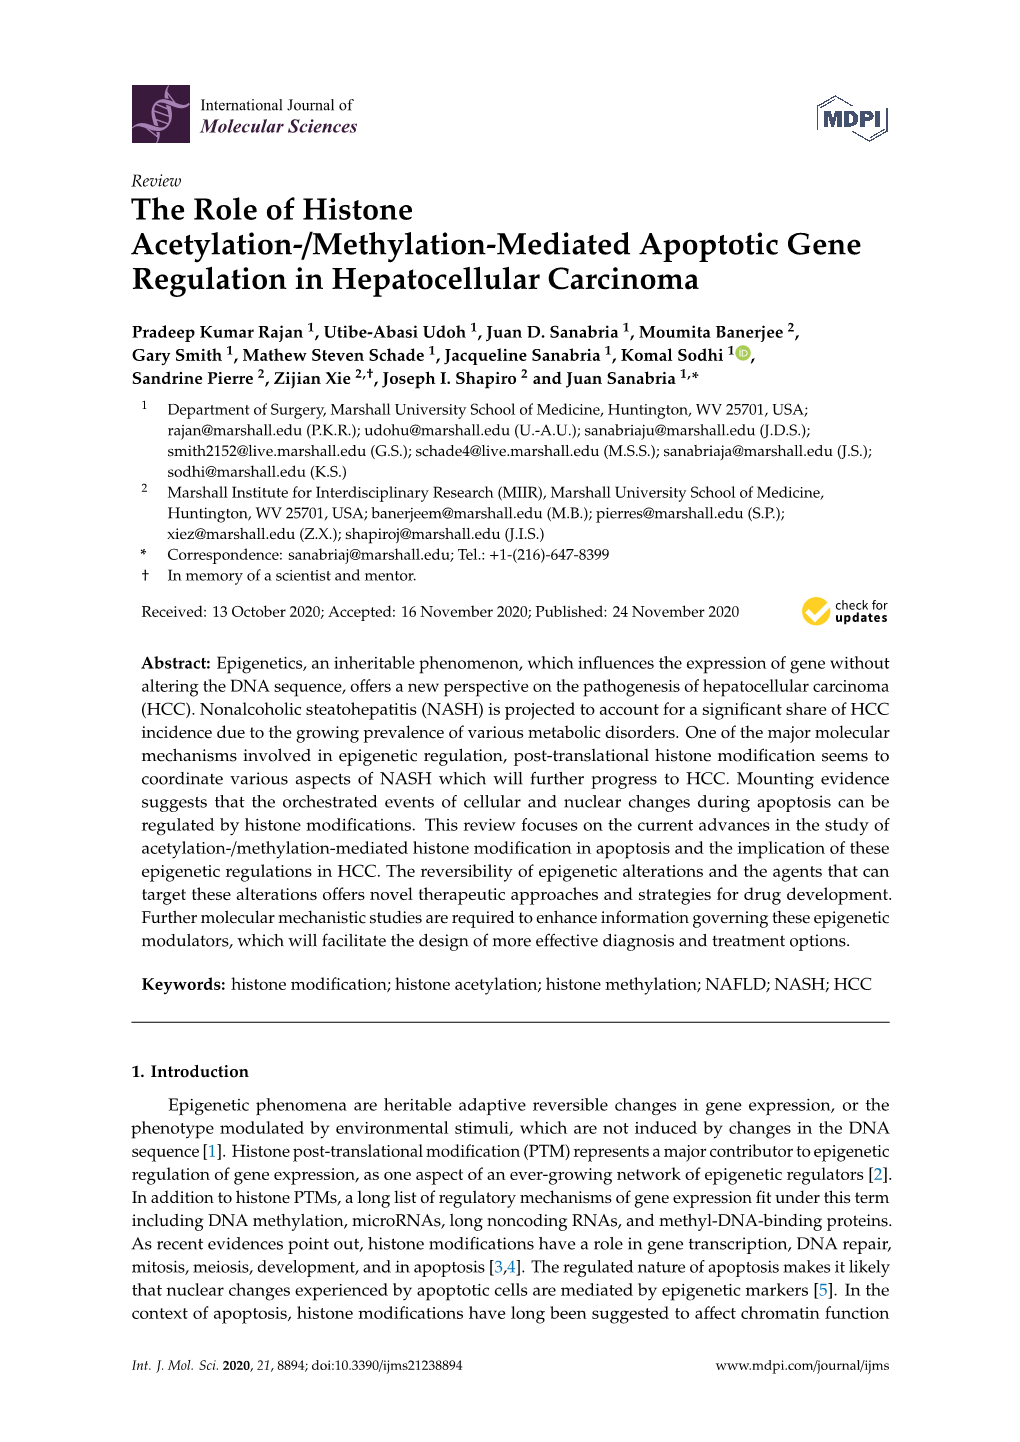 The Role of Histone Acetylation-/Methylation-Mediated Apoptotic Gene Regulation in Hepatocellular Carcinoma